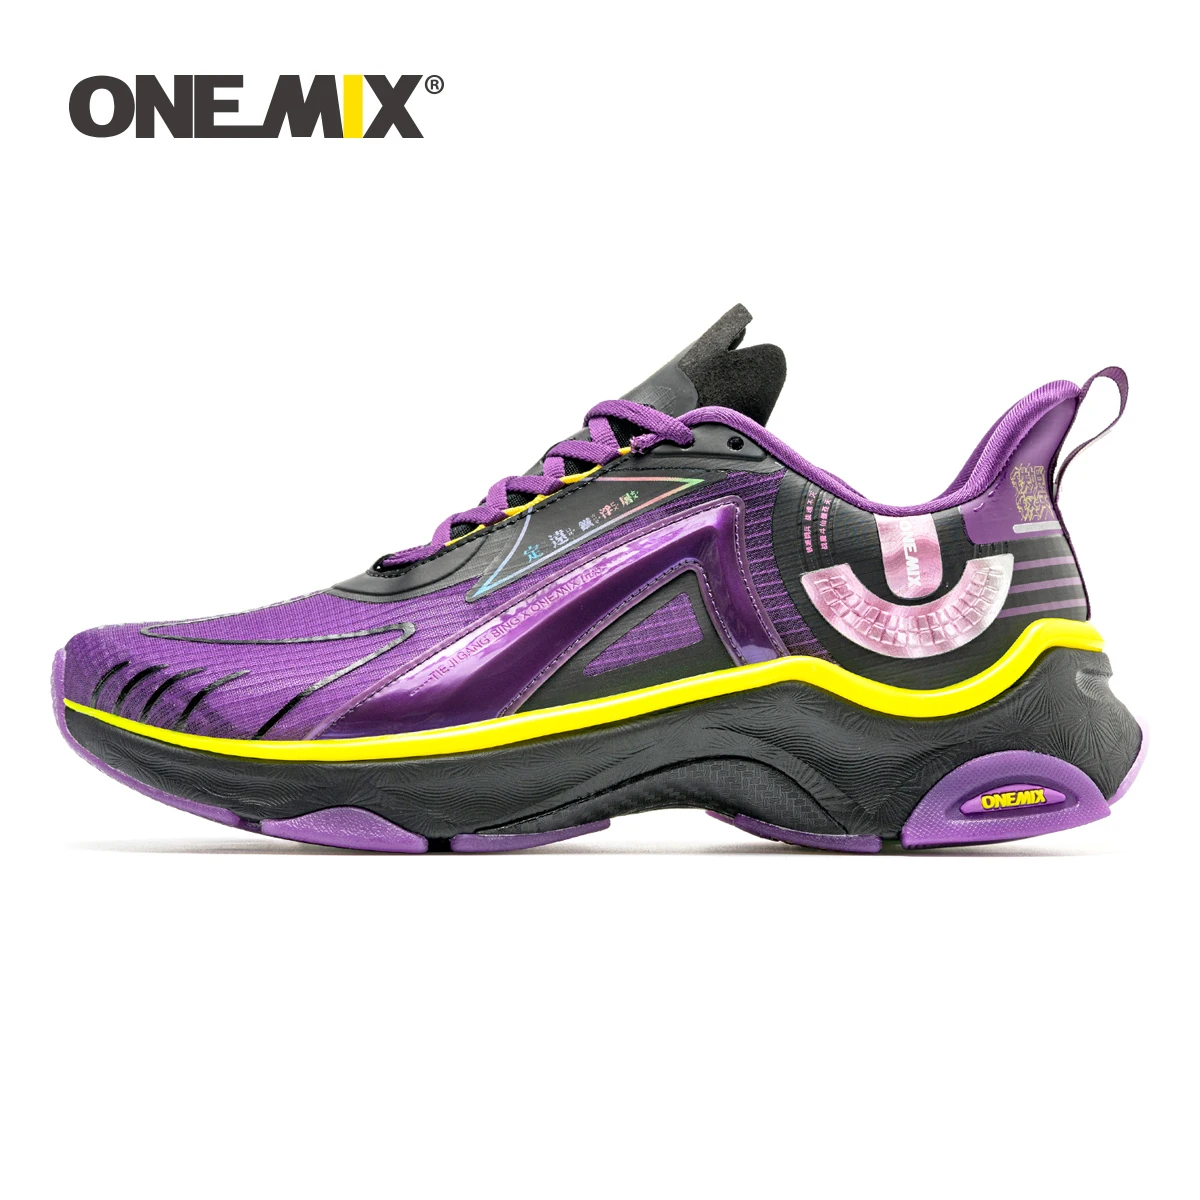 ONEMIX Original Design Sneakers Technology training no carbon plate Men Breathable Wear-resistant Sports Jogging running Shoes